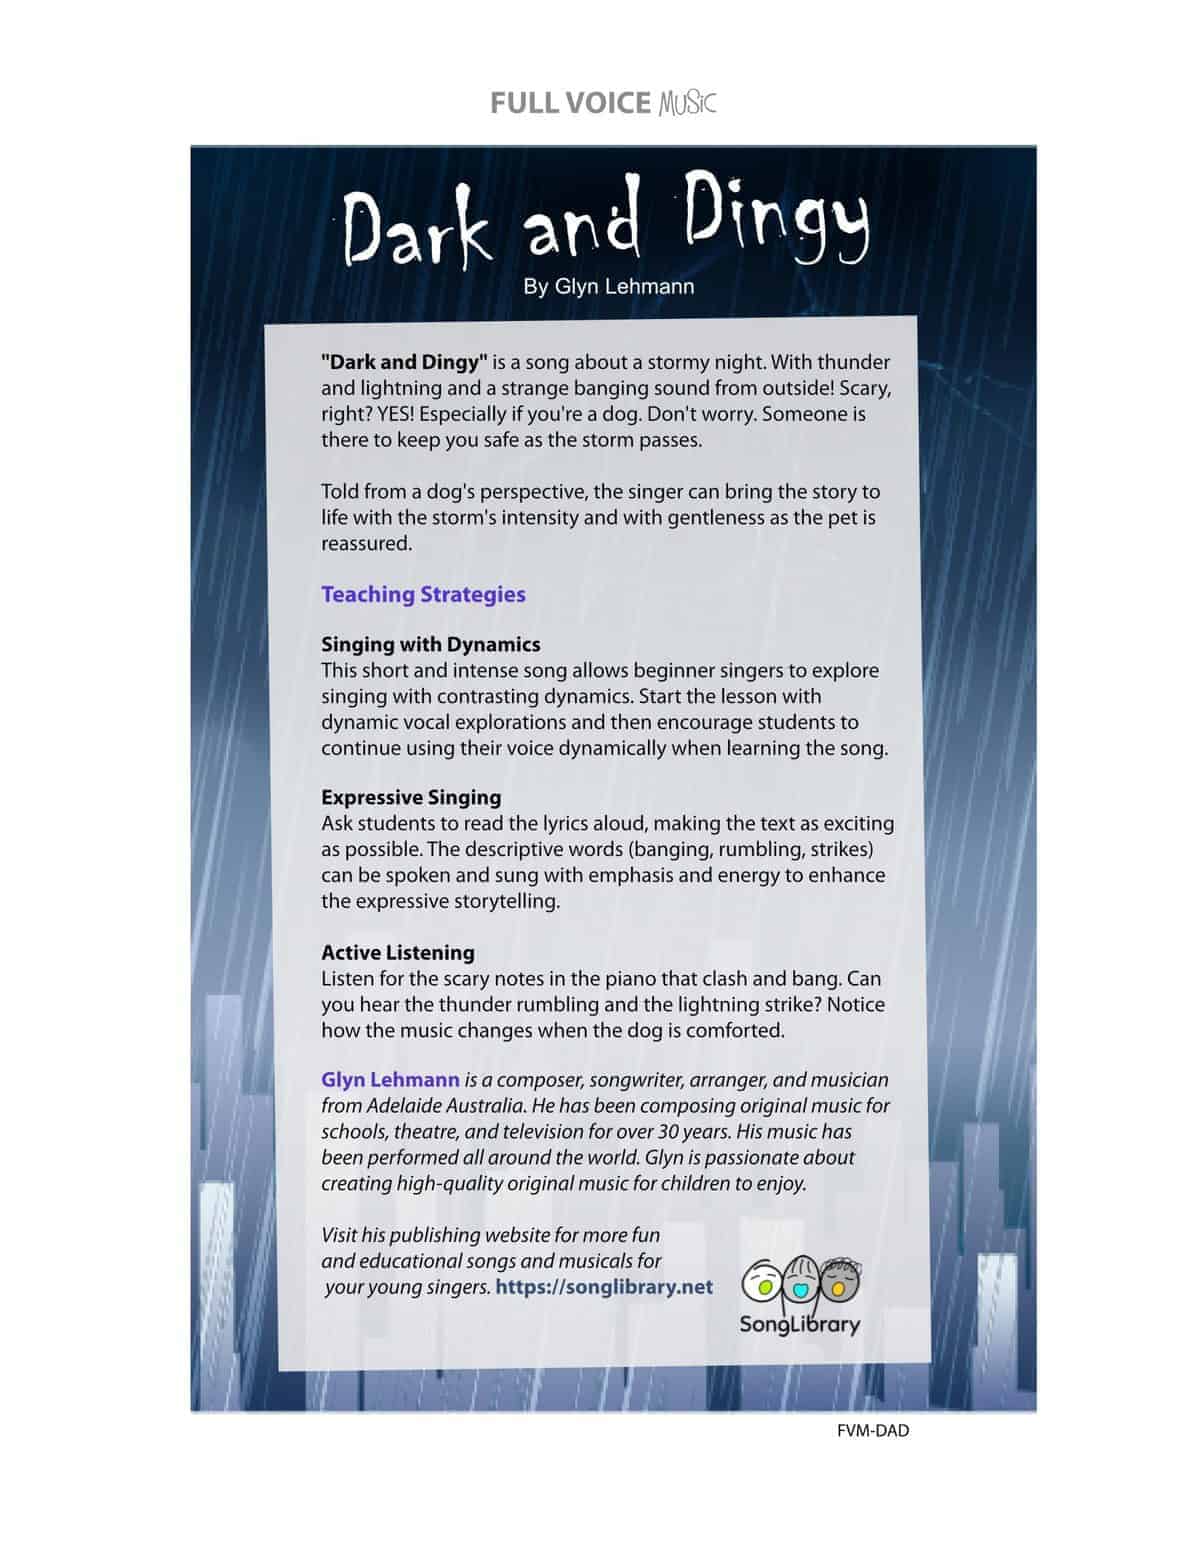 Dark and Dingy by Glyn Lehmann